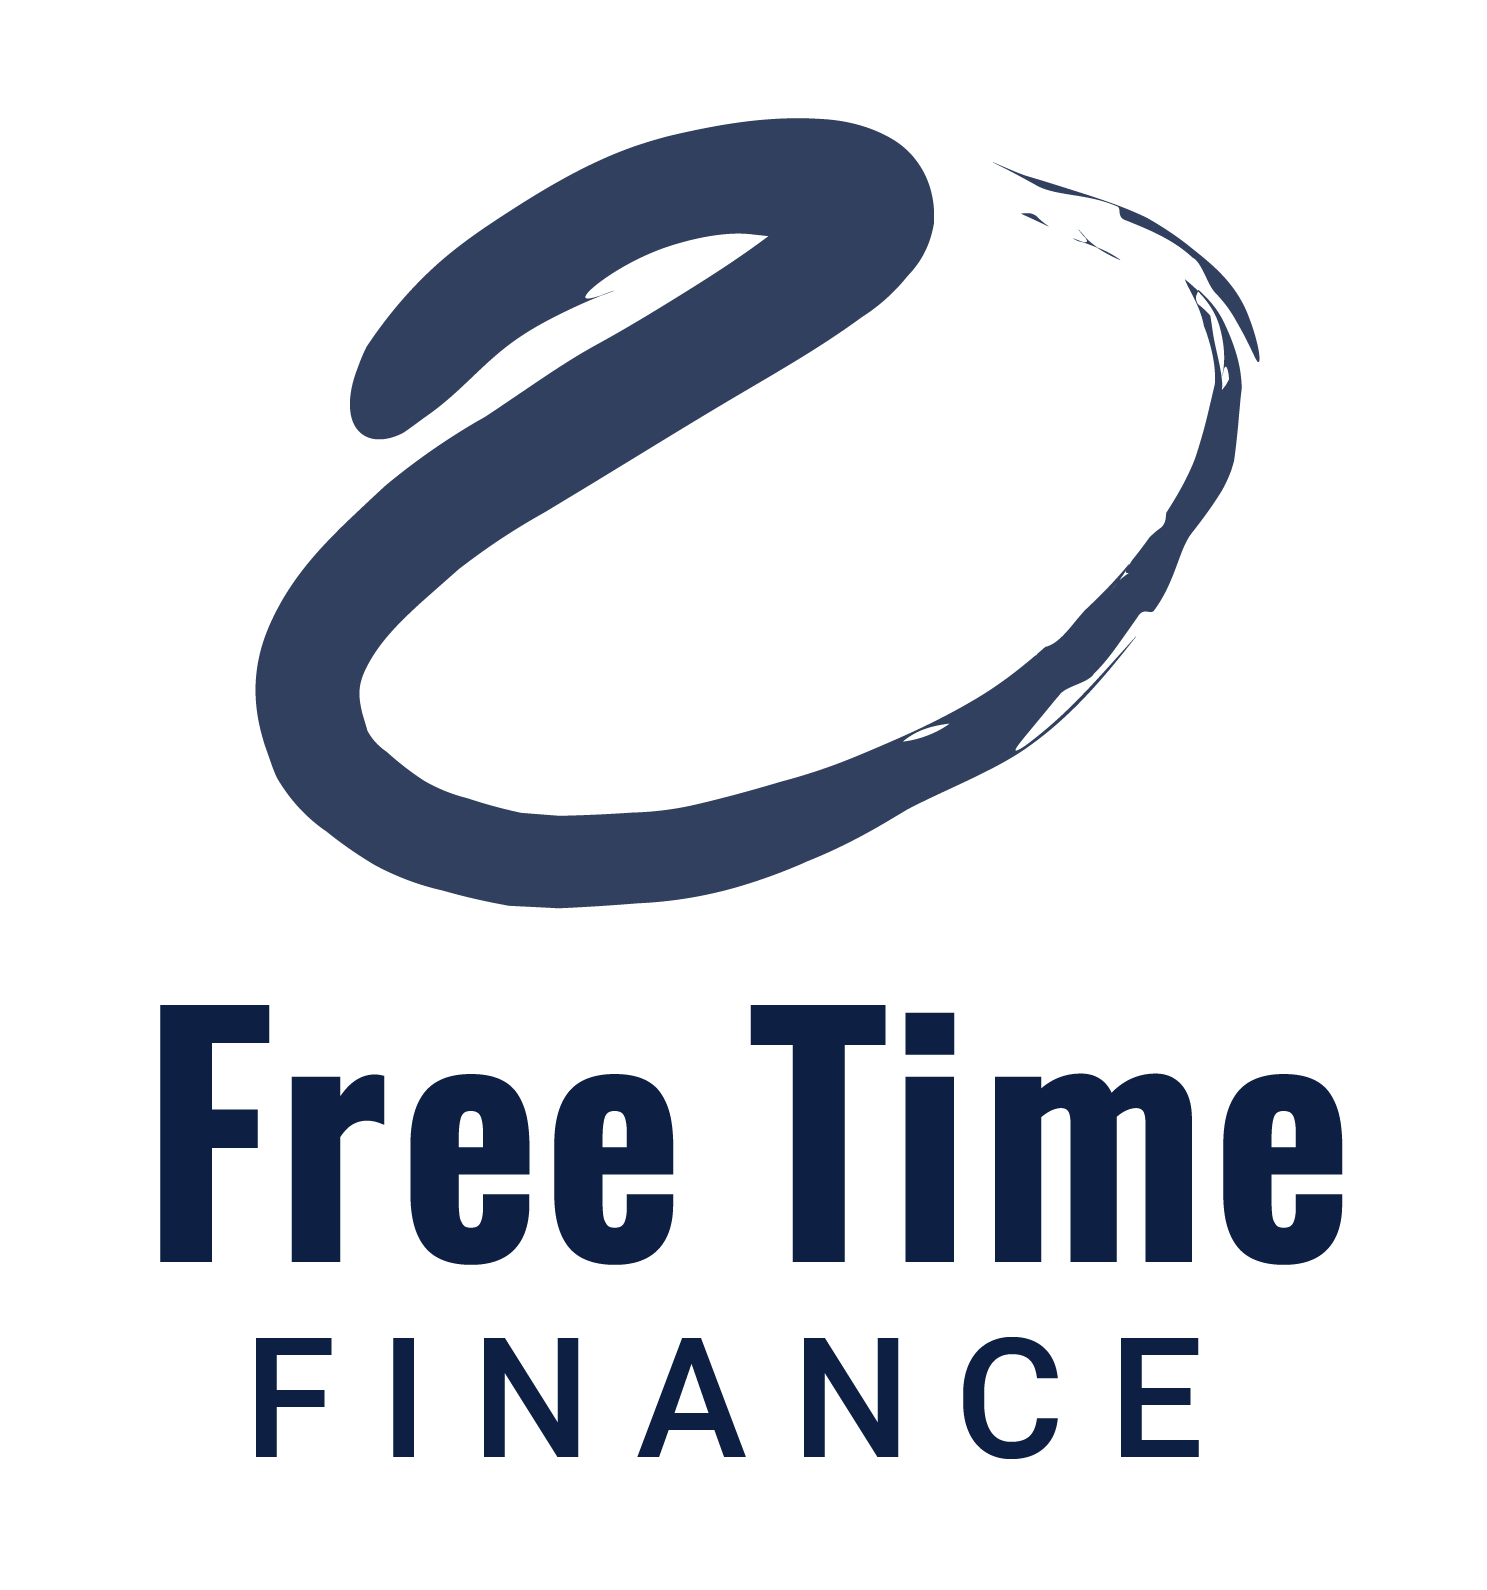 FreeTime Finance